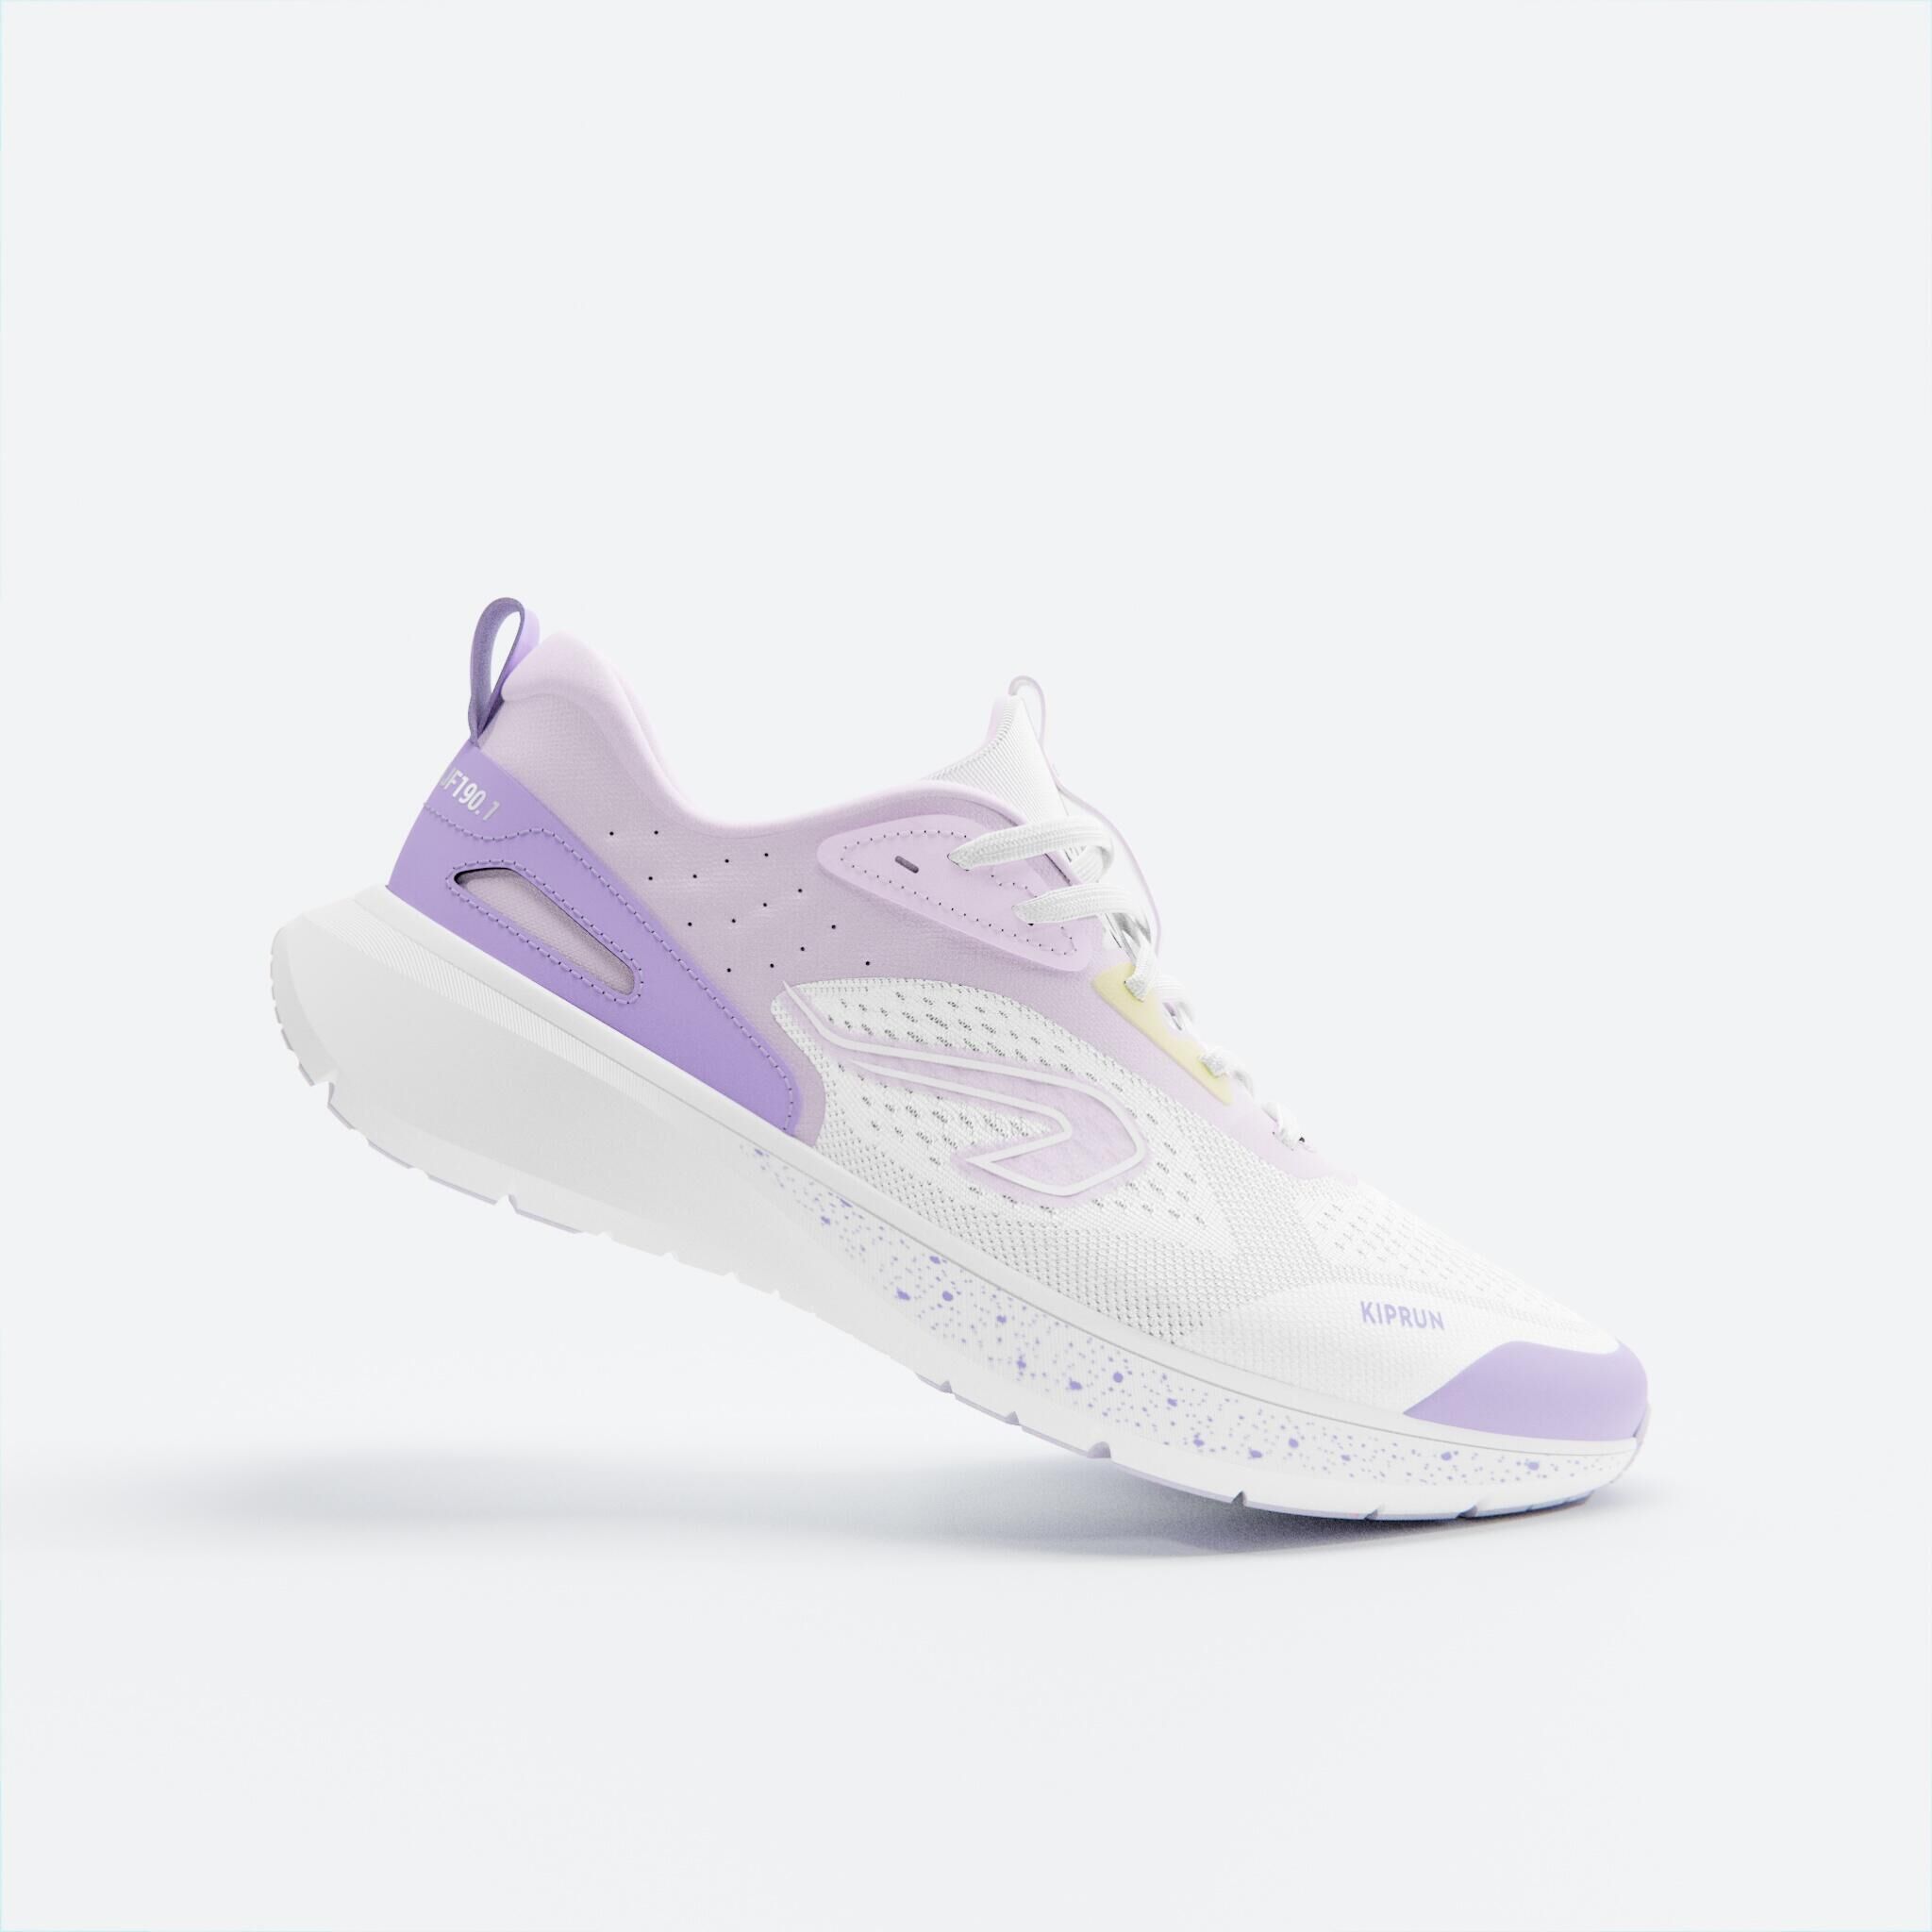 KIPRUN JOGFLOW 190.1 Women's Running Shoes - White/Purple